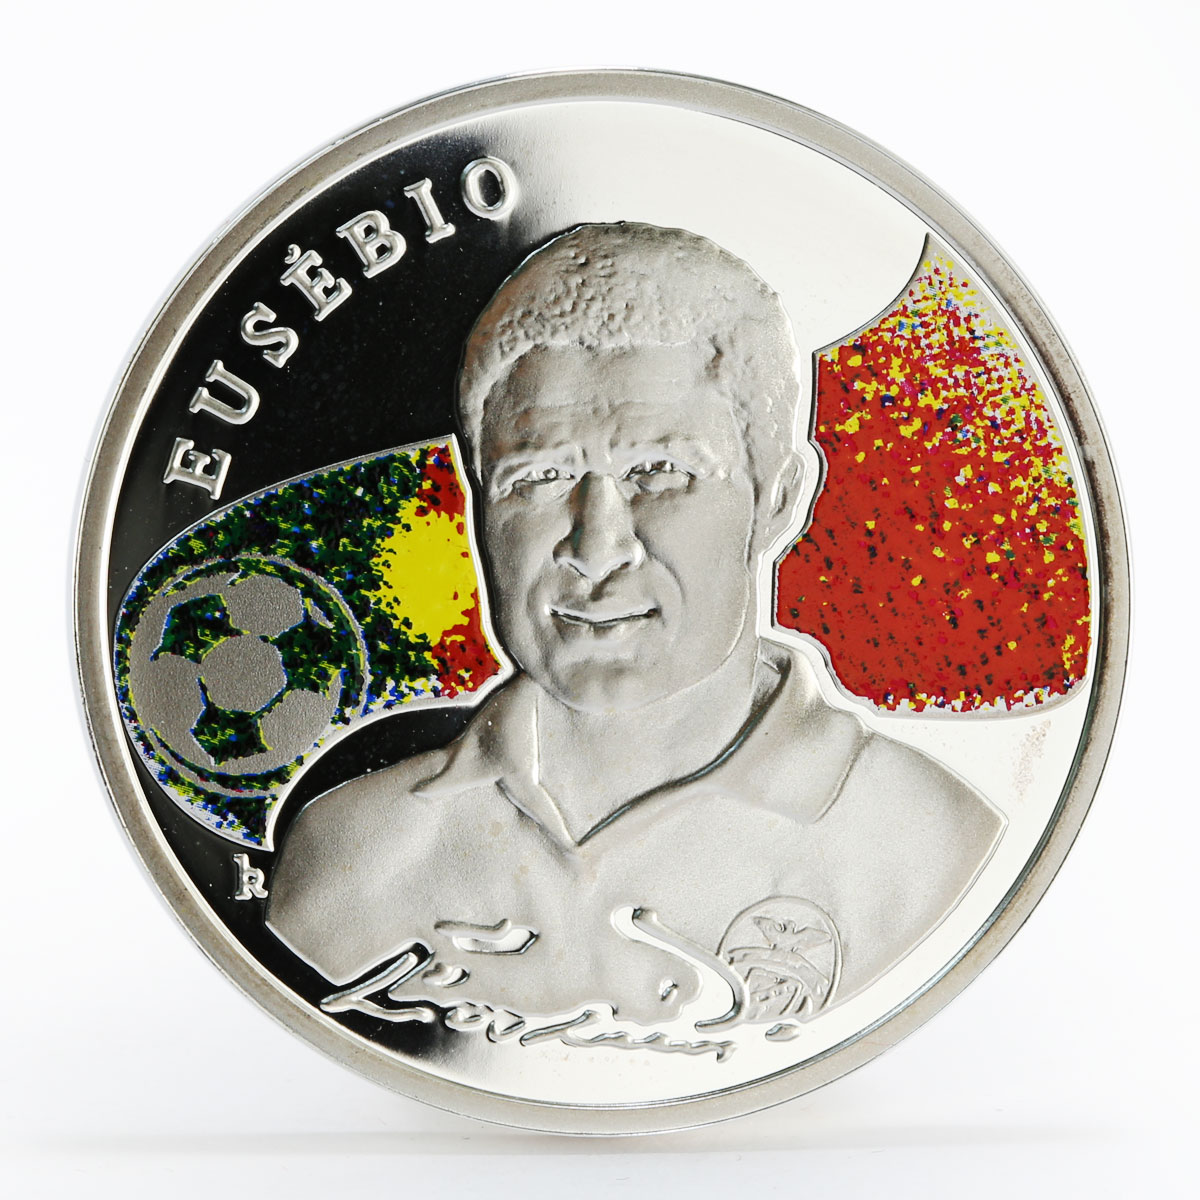 Armenia 100 dram Kings of Football series Eusebio proof silver coin 2008